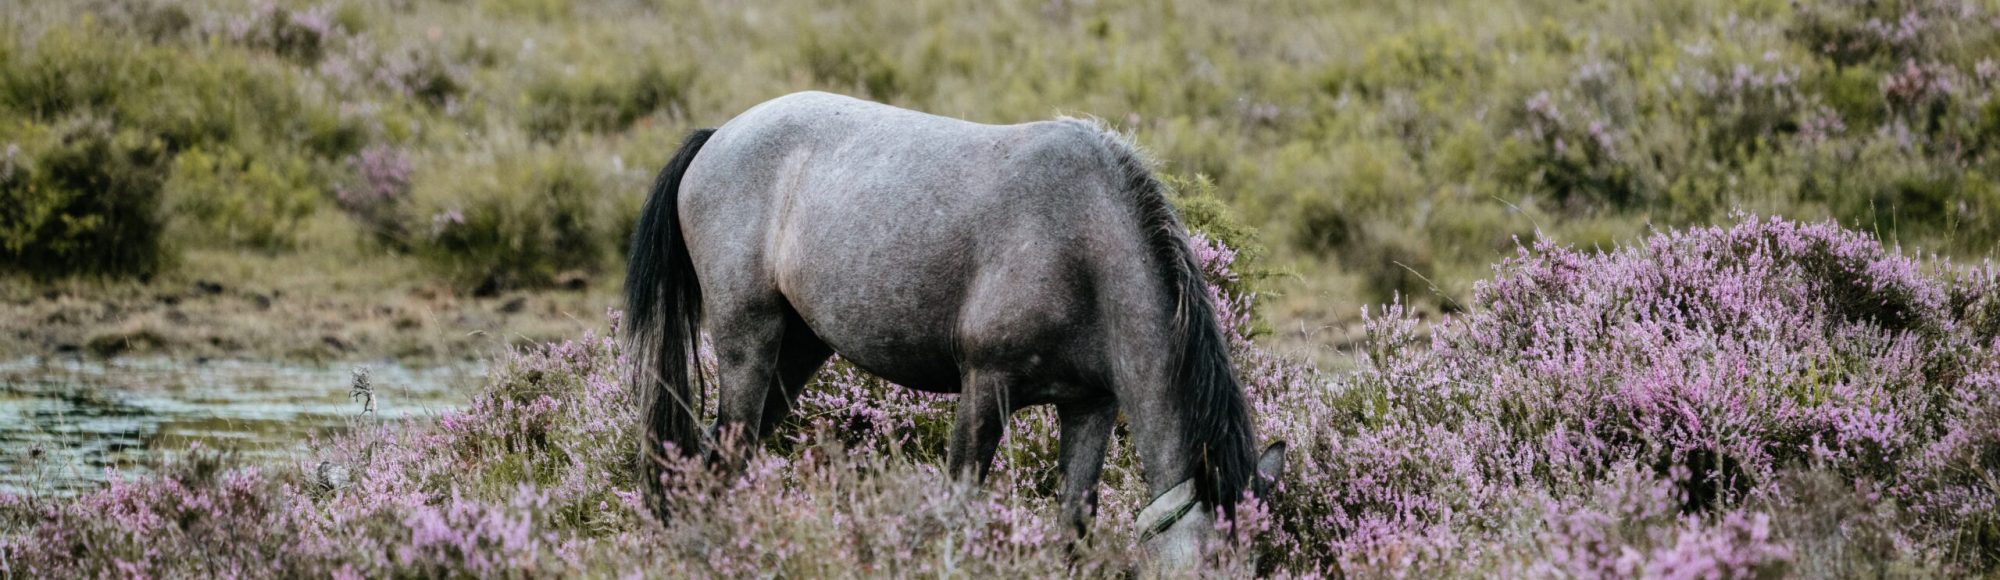 A new forest pony grazing among purple plants in bushy grass region